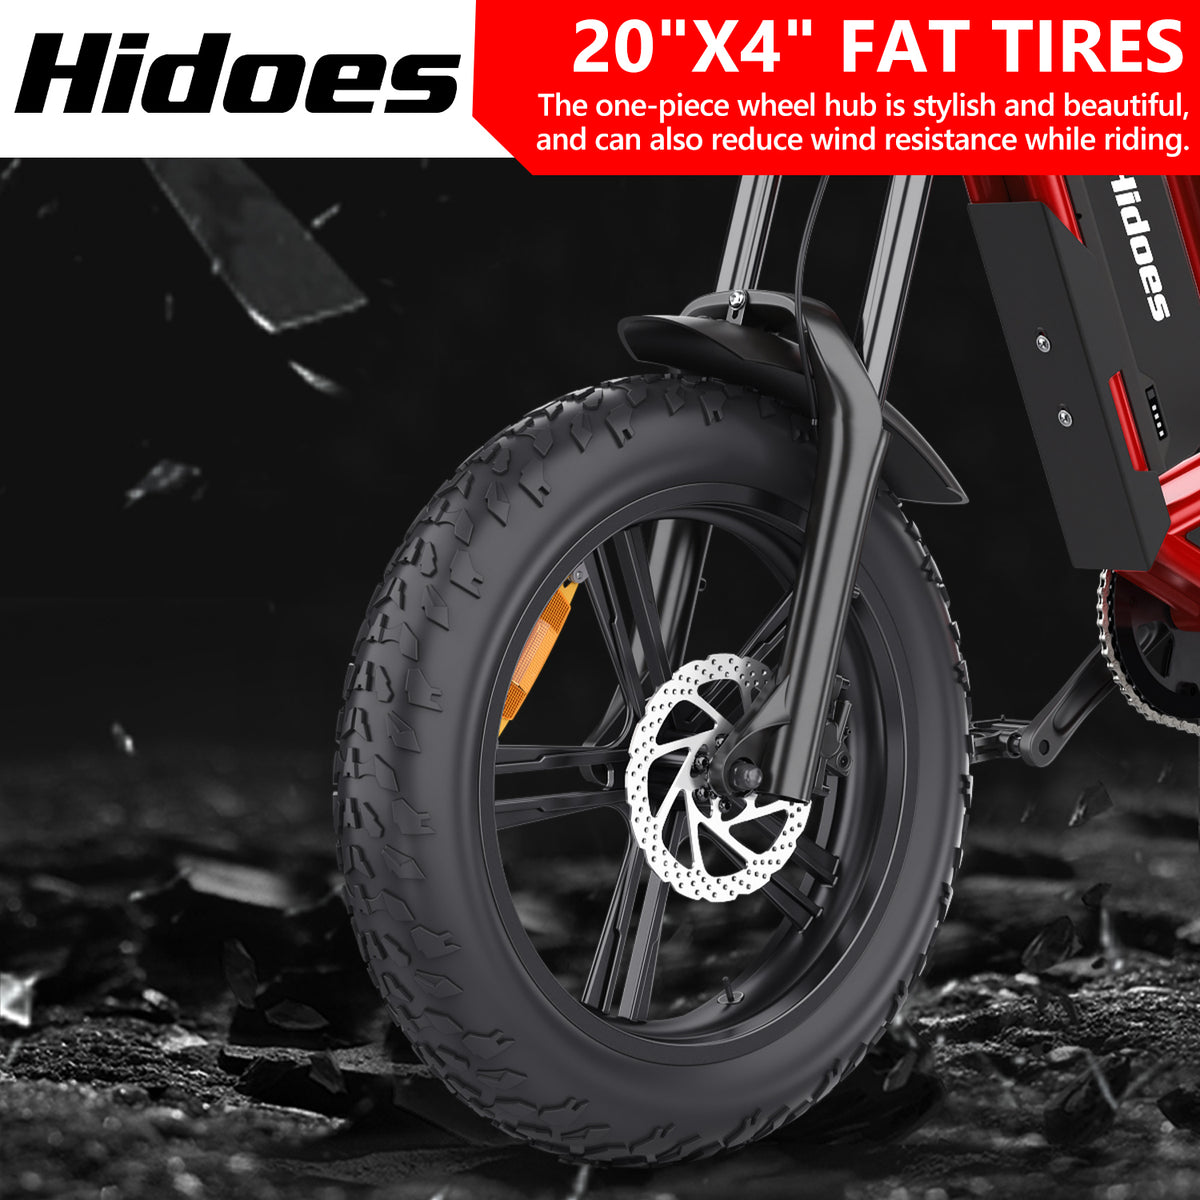 Hidoes B6 fat tire electric bike with 20" x4" fat tire electric bike